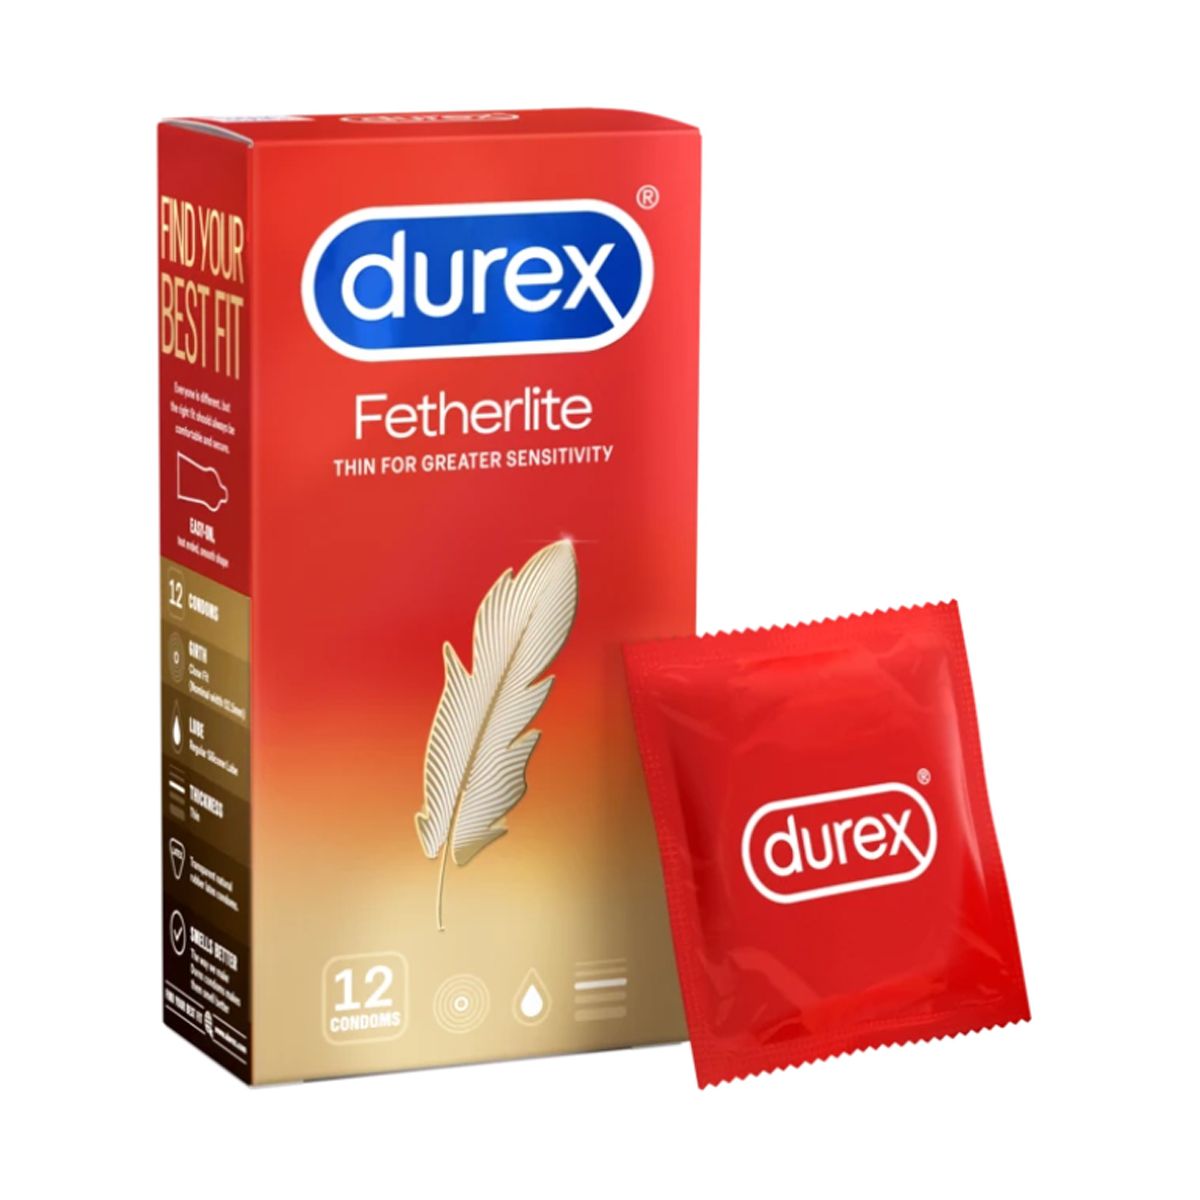 Bao cao su Durex Fetherlite Siêu mỏng – hộp 12 chiếc